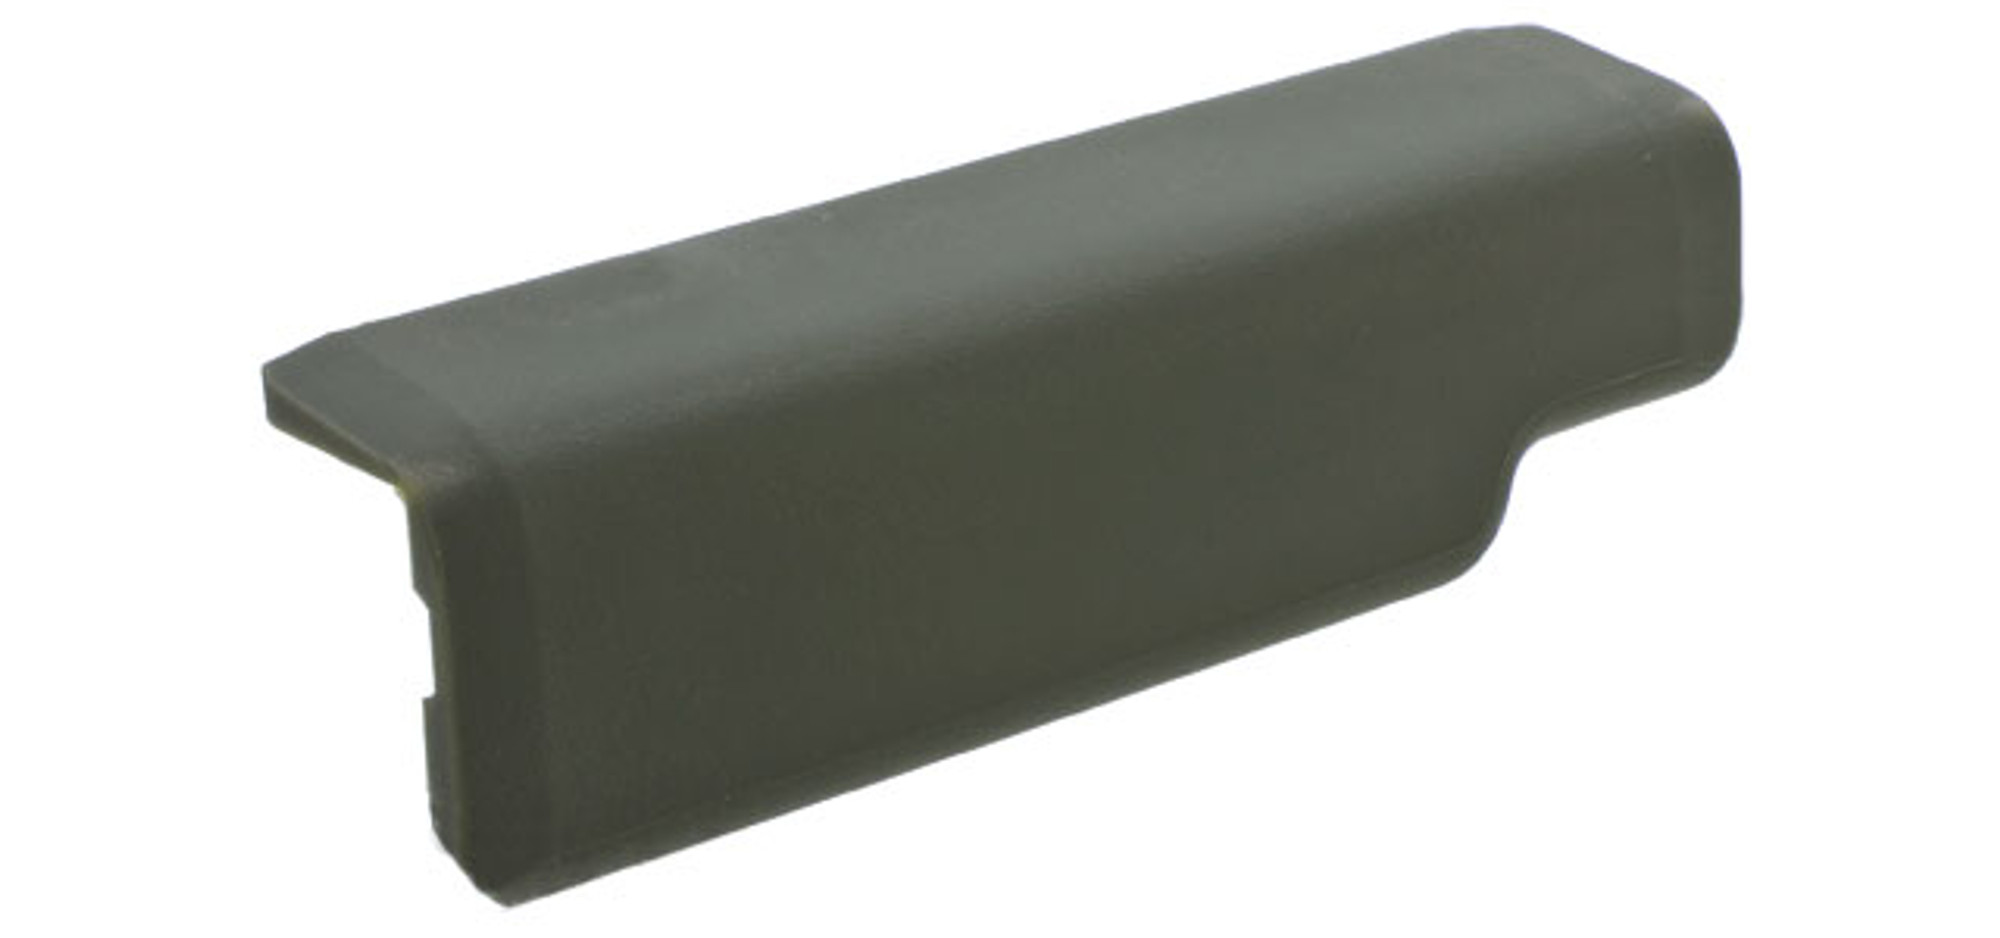 WE-Tech Cheek Rest for L85 Series Airsoft GBB Rifles